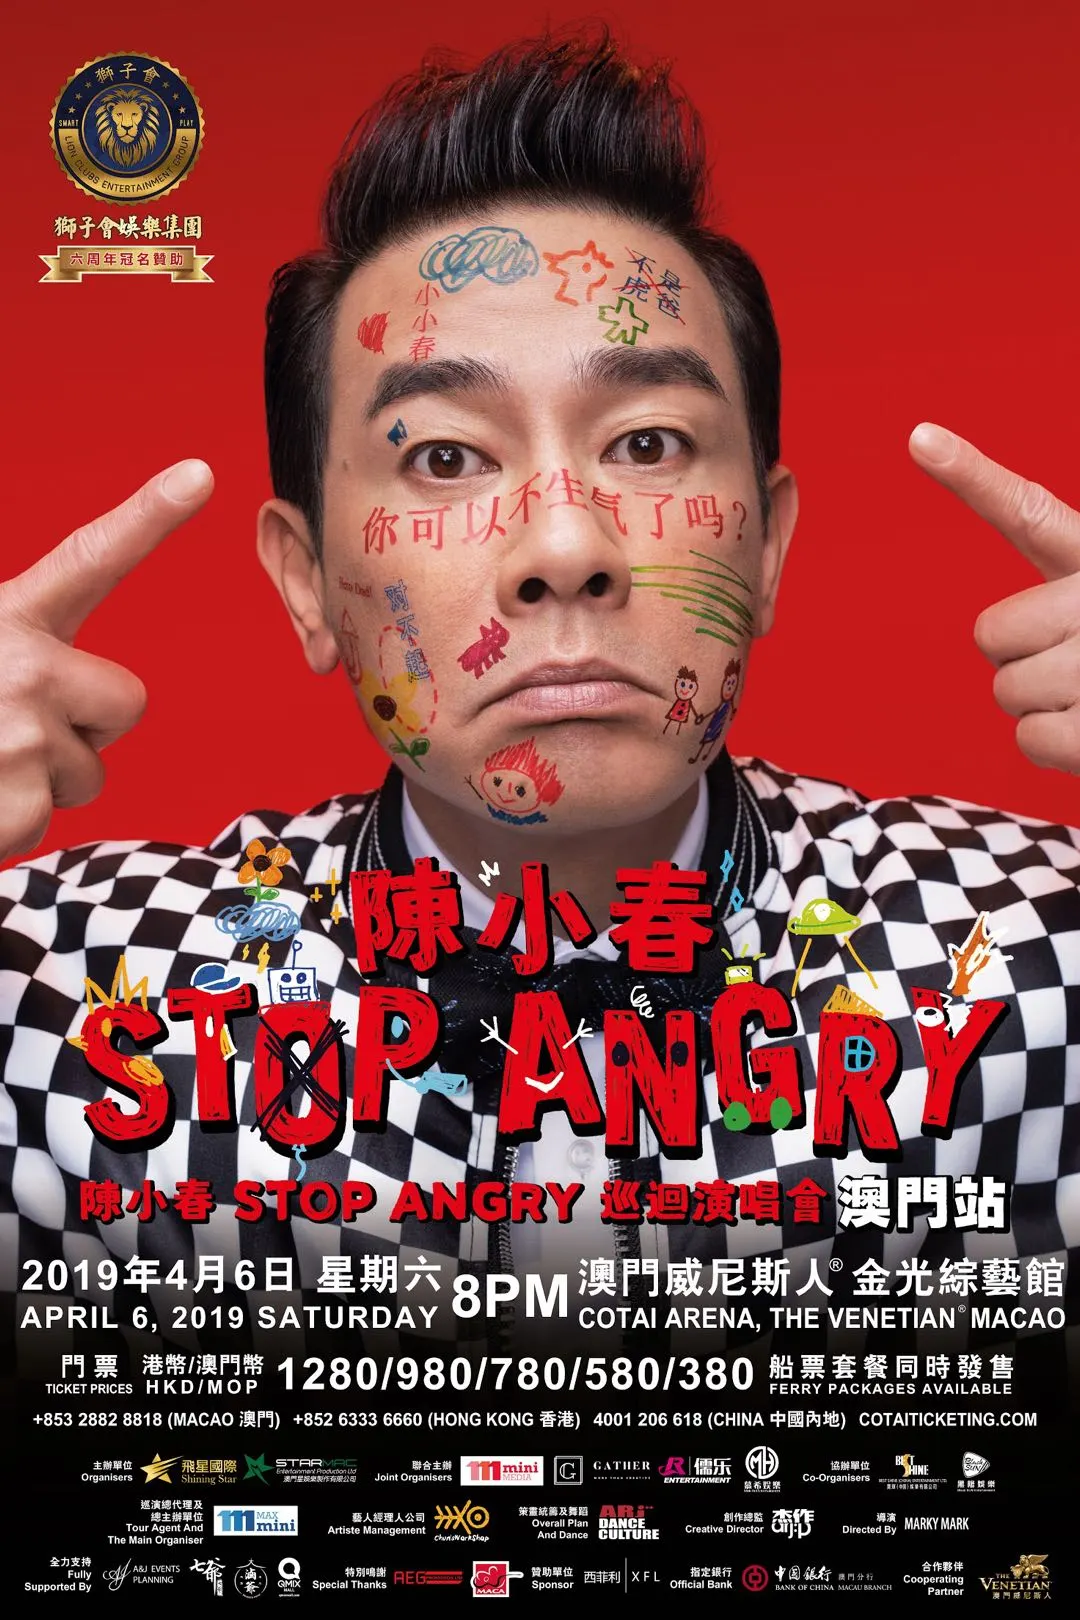  Jordan Chan STOP ANGRY演唱会澳门站海报.jpg